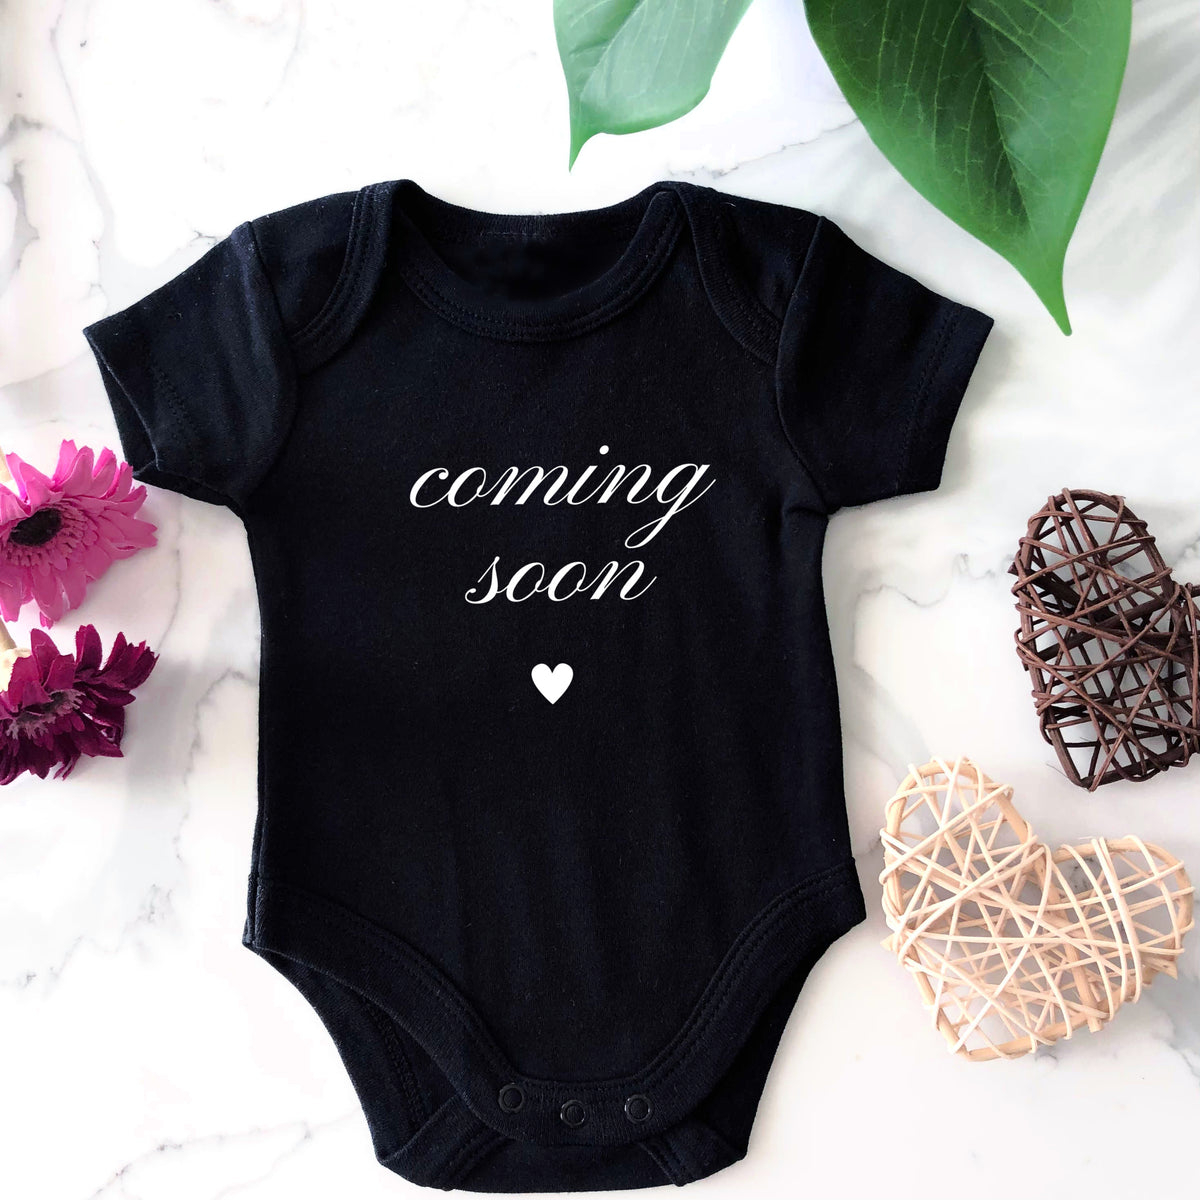 Baby Onesie - "Coming Soon" Pregnancy Announcement